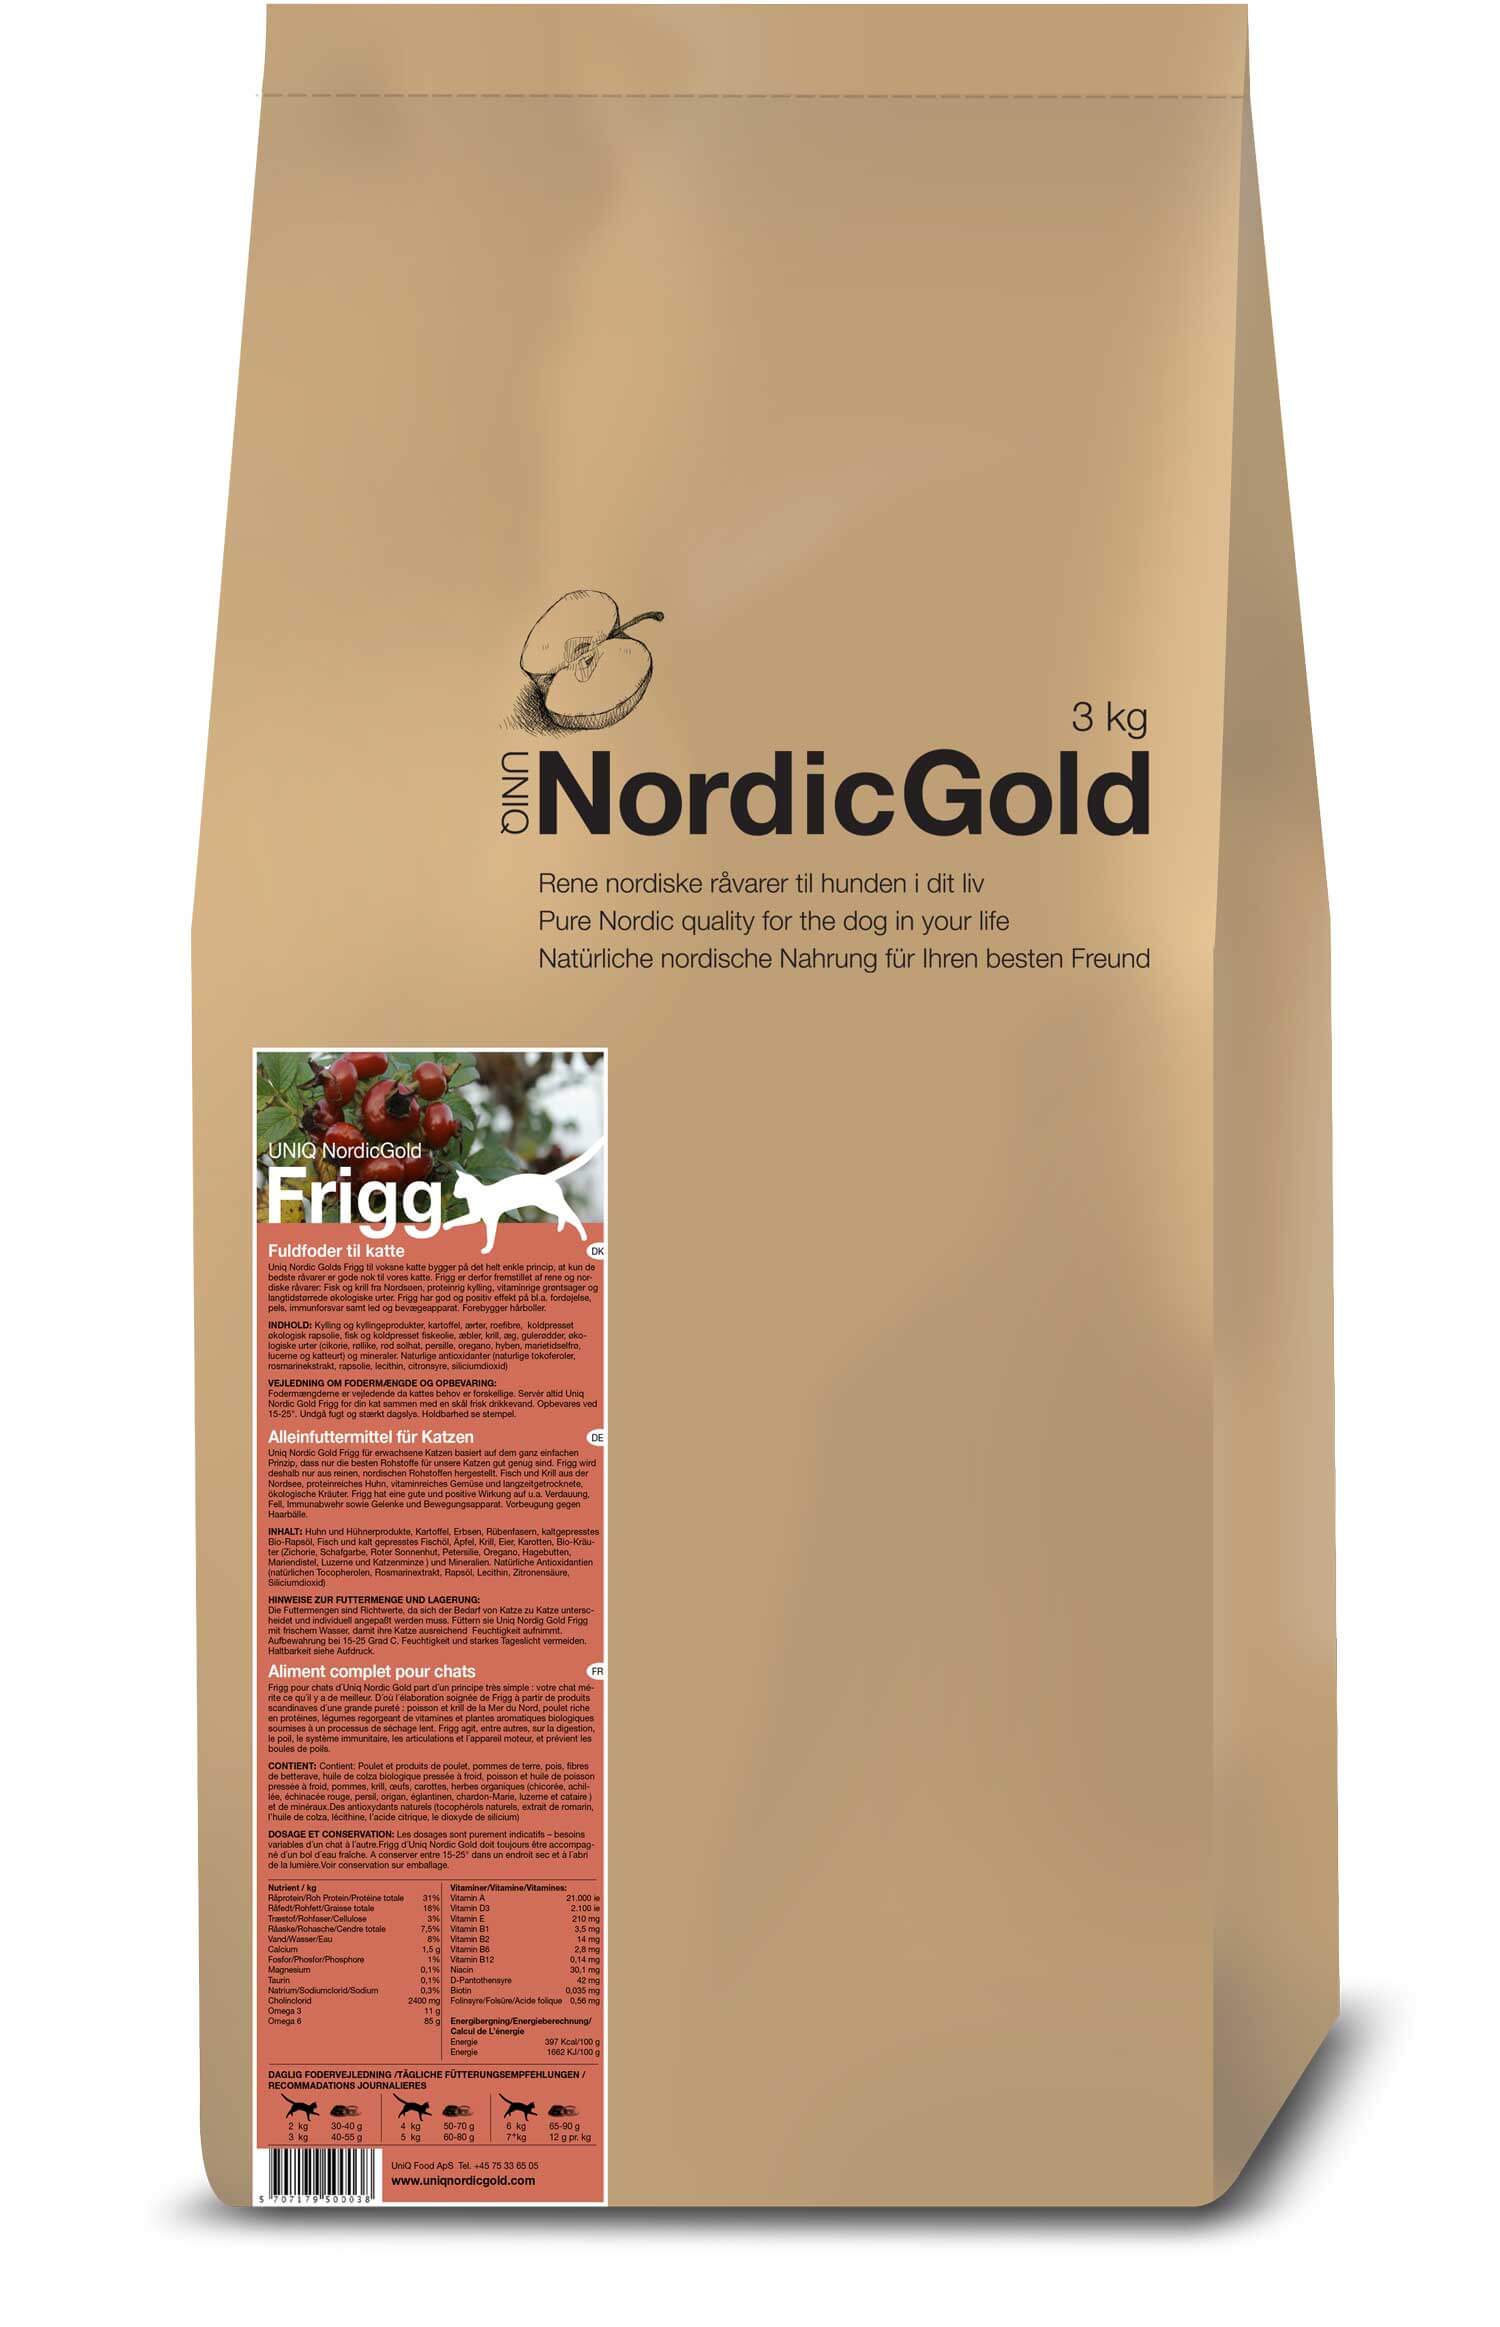 UniQ - Nordic Gold Frigg 3 kg Kattefoder voksen